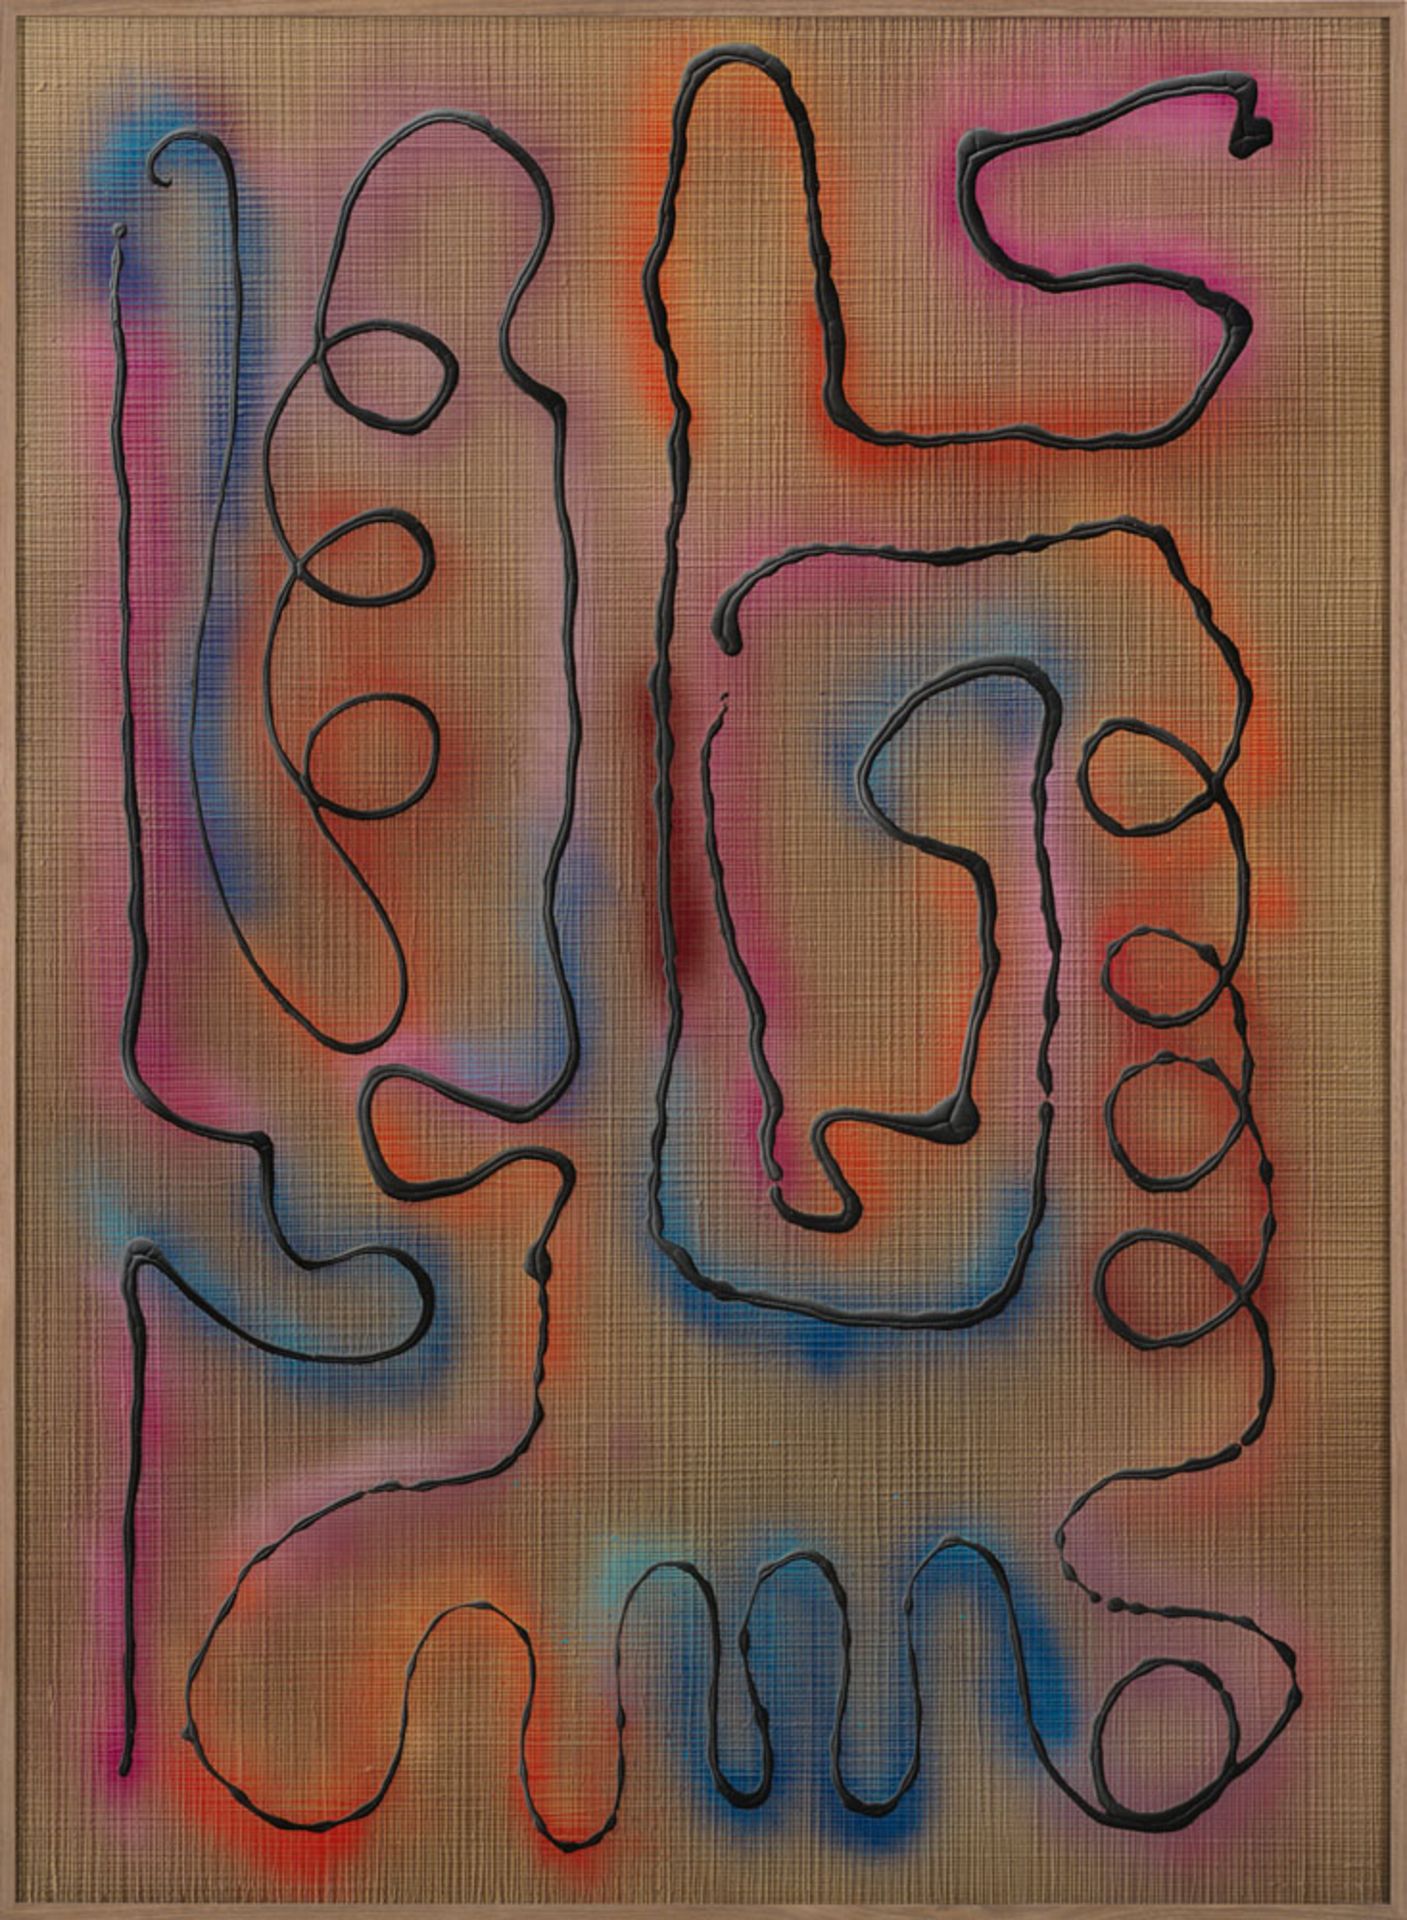 122 - - Stefan Sehler. o. T. 2018. Acryl, Lack hinter Plexiglas. Unikat. 173 cm x 127